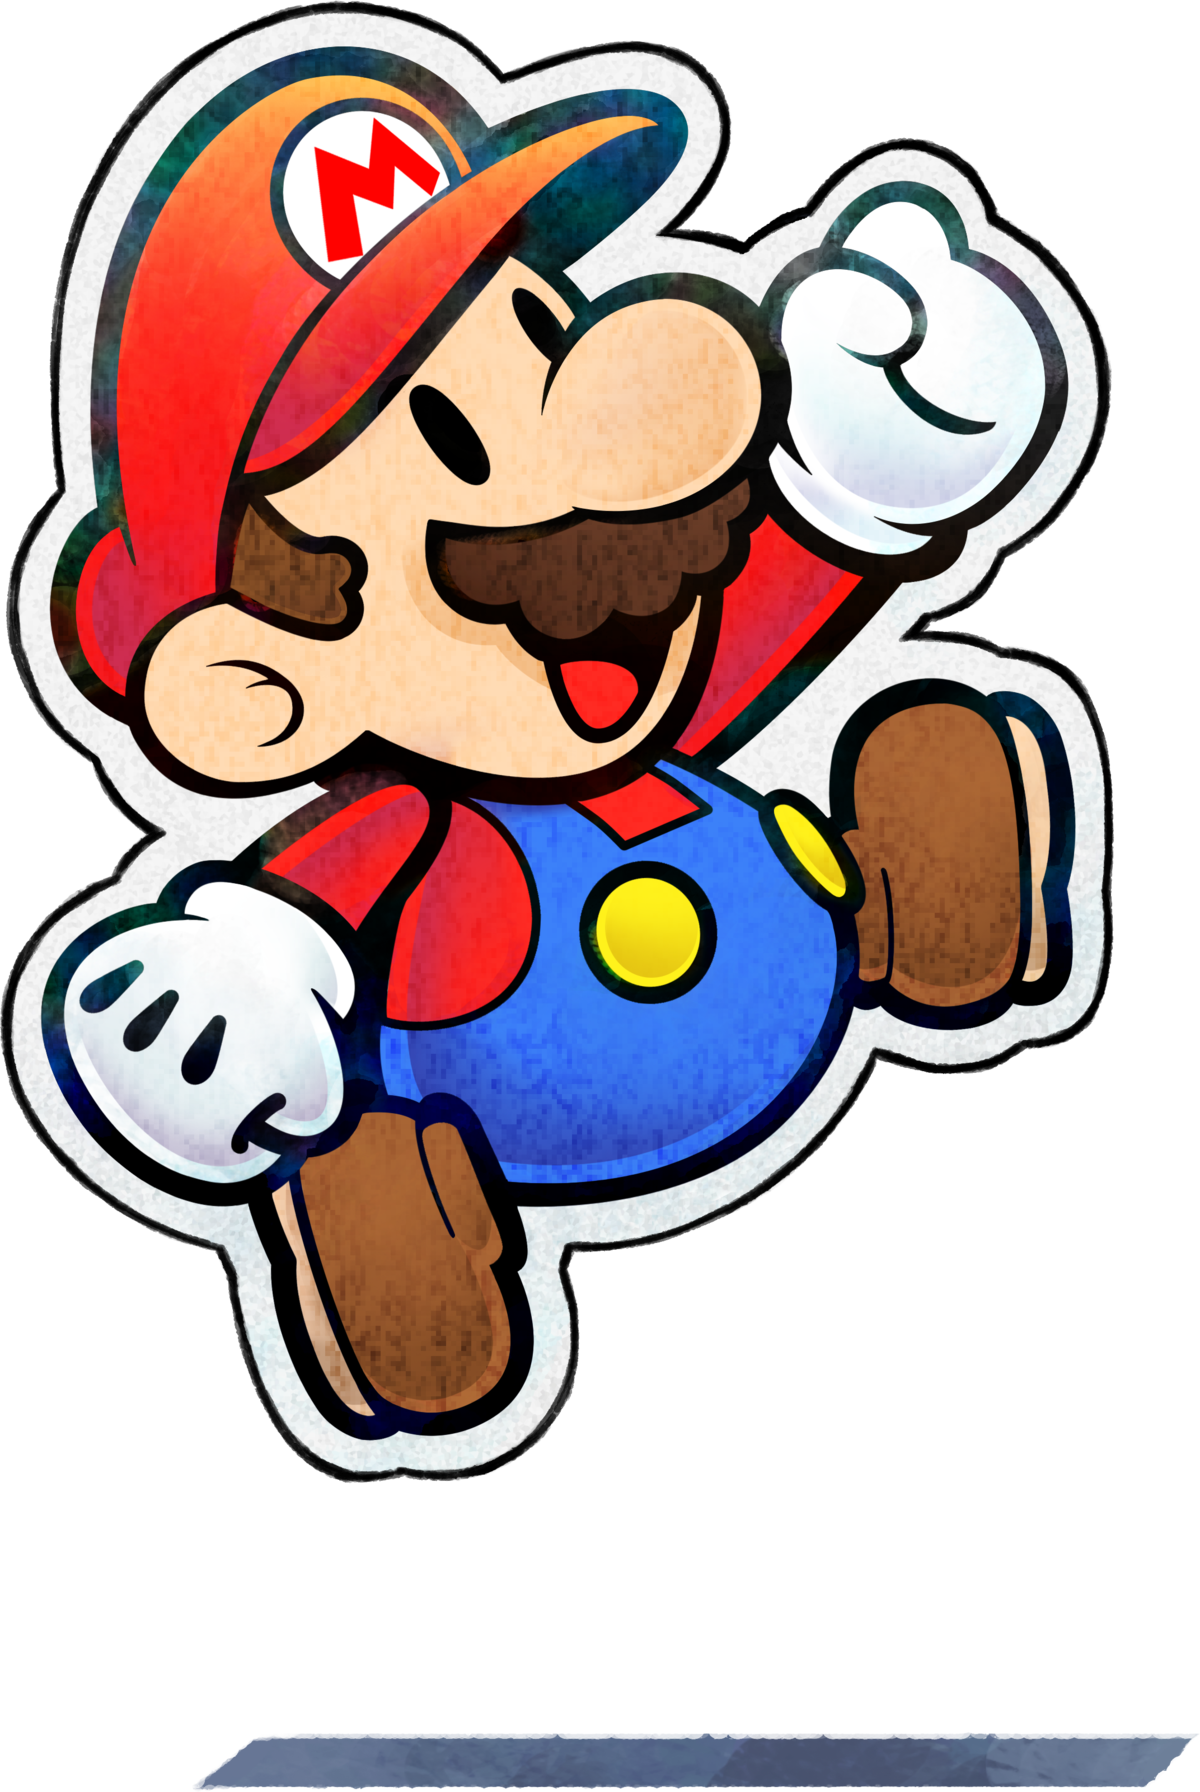 Paper Mario - Super Mario Wiki, the Mario encyclopedia